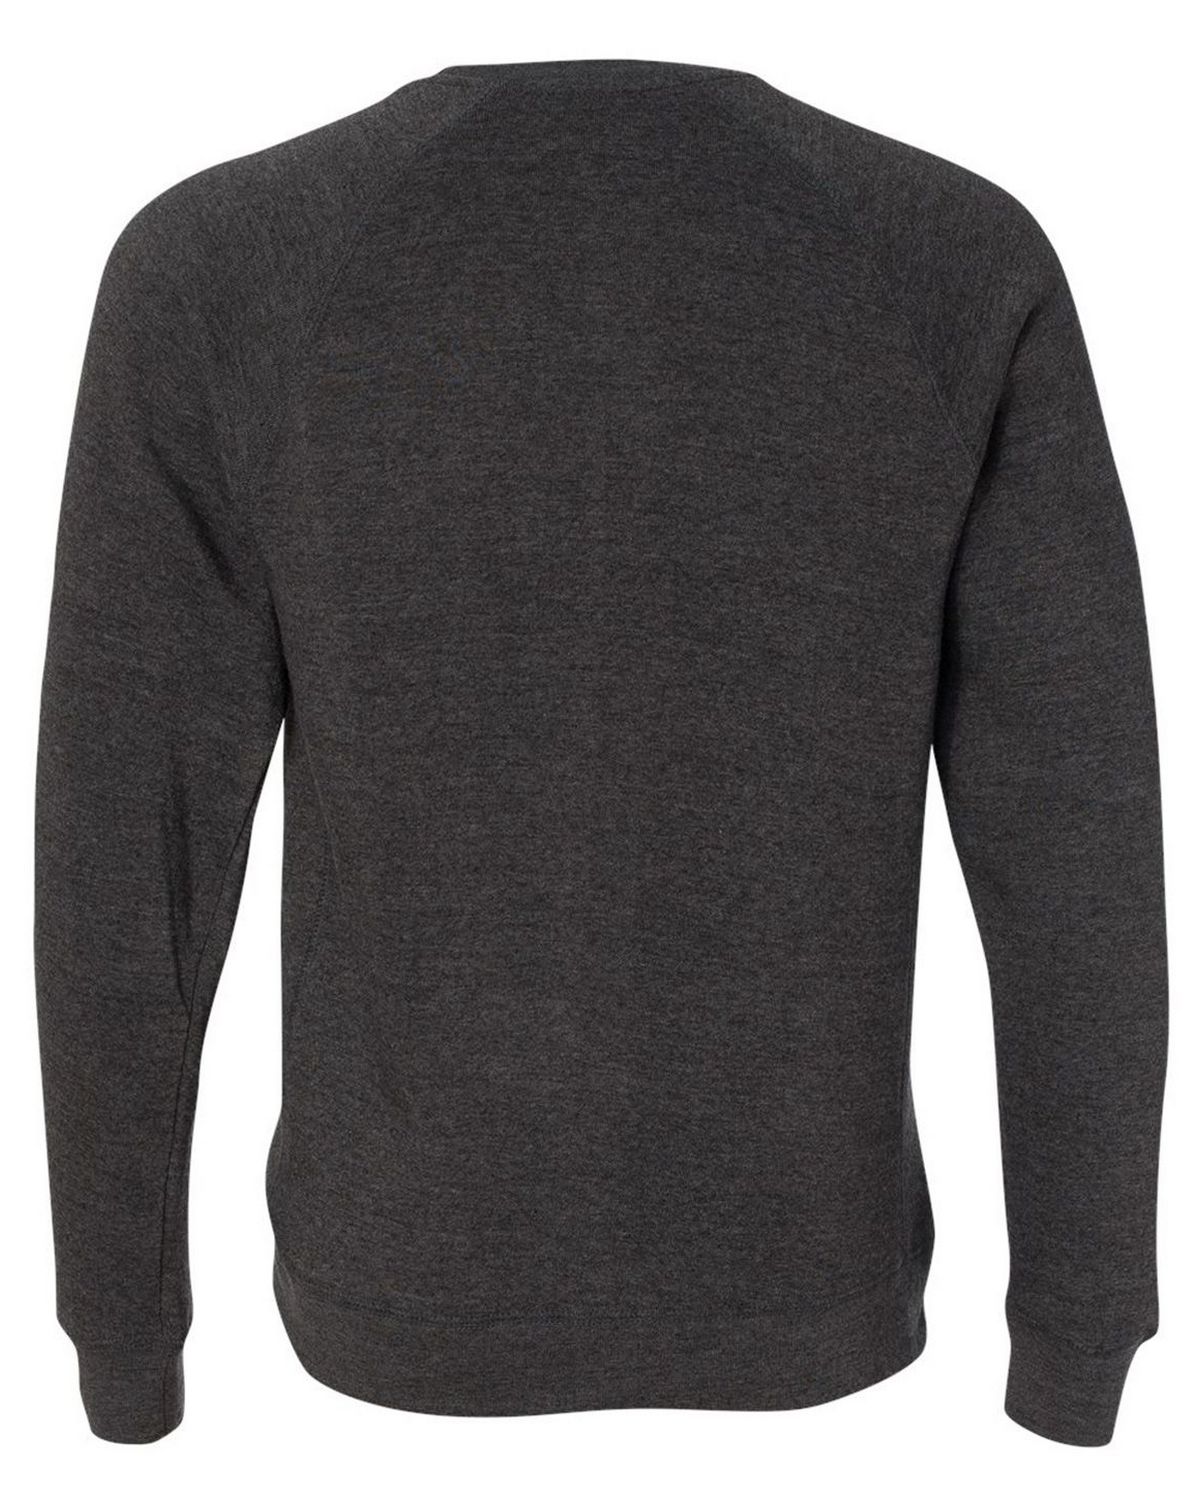 'Independent Trading Co. PRM30SBC Unisex Special Blend Raglan Crewneck Sweatshirt'